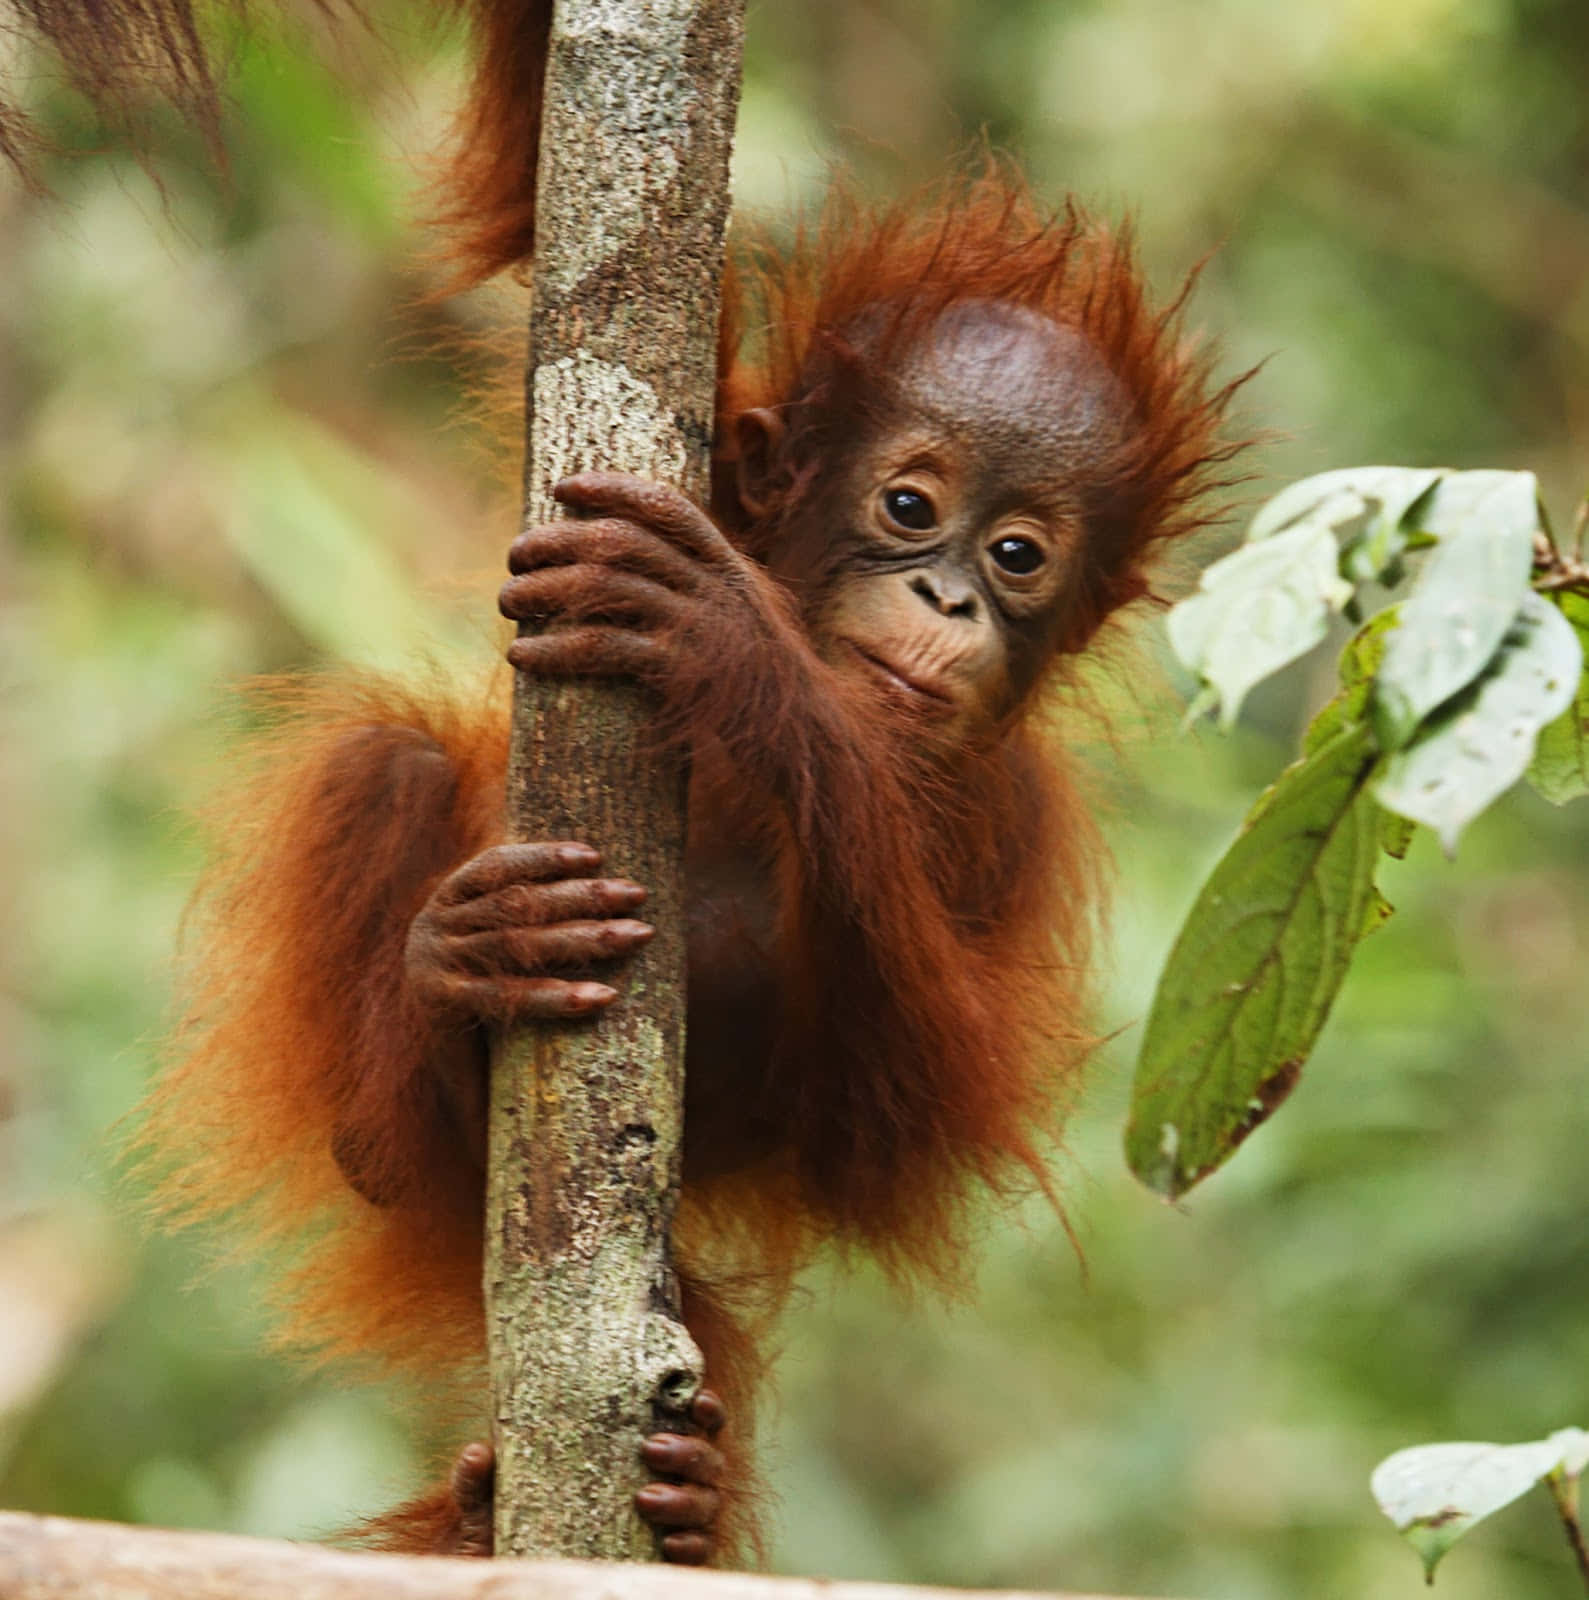 An orangutan in its natural habitat.